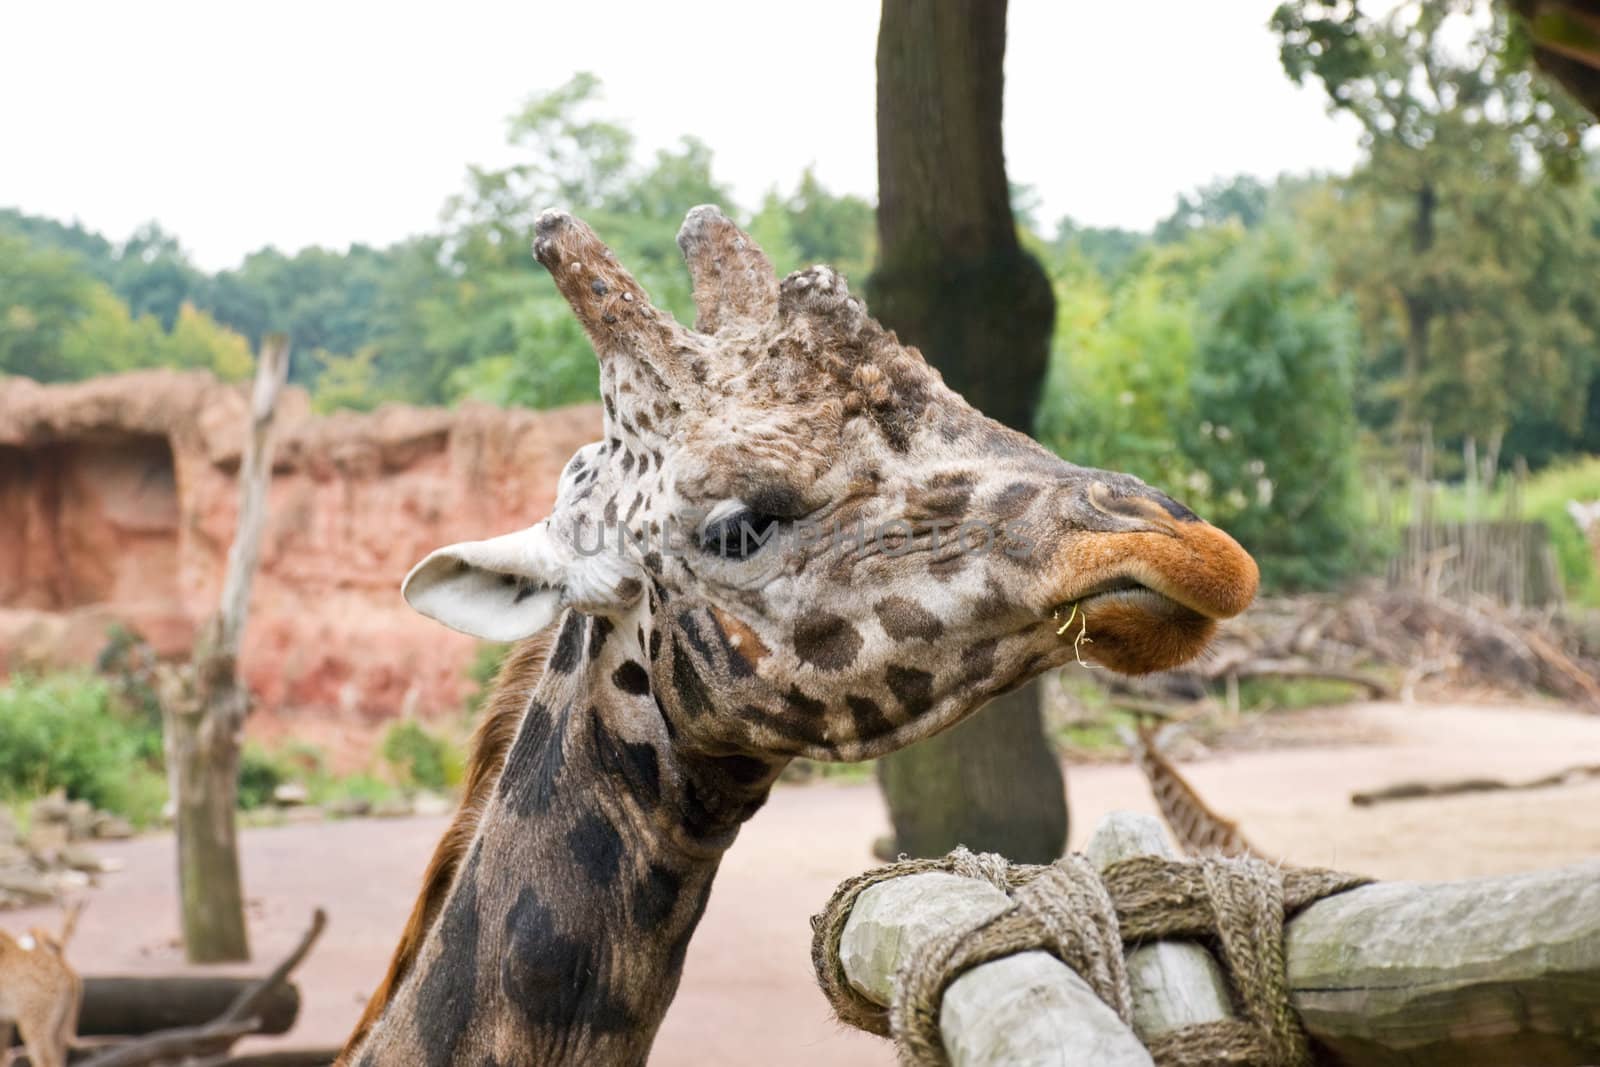 Giraffe Eating by y_serge